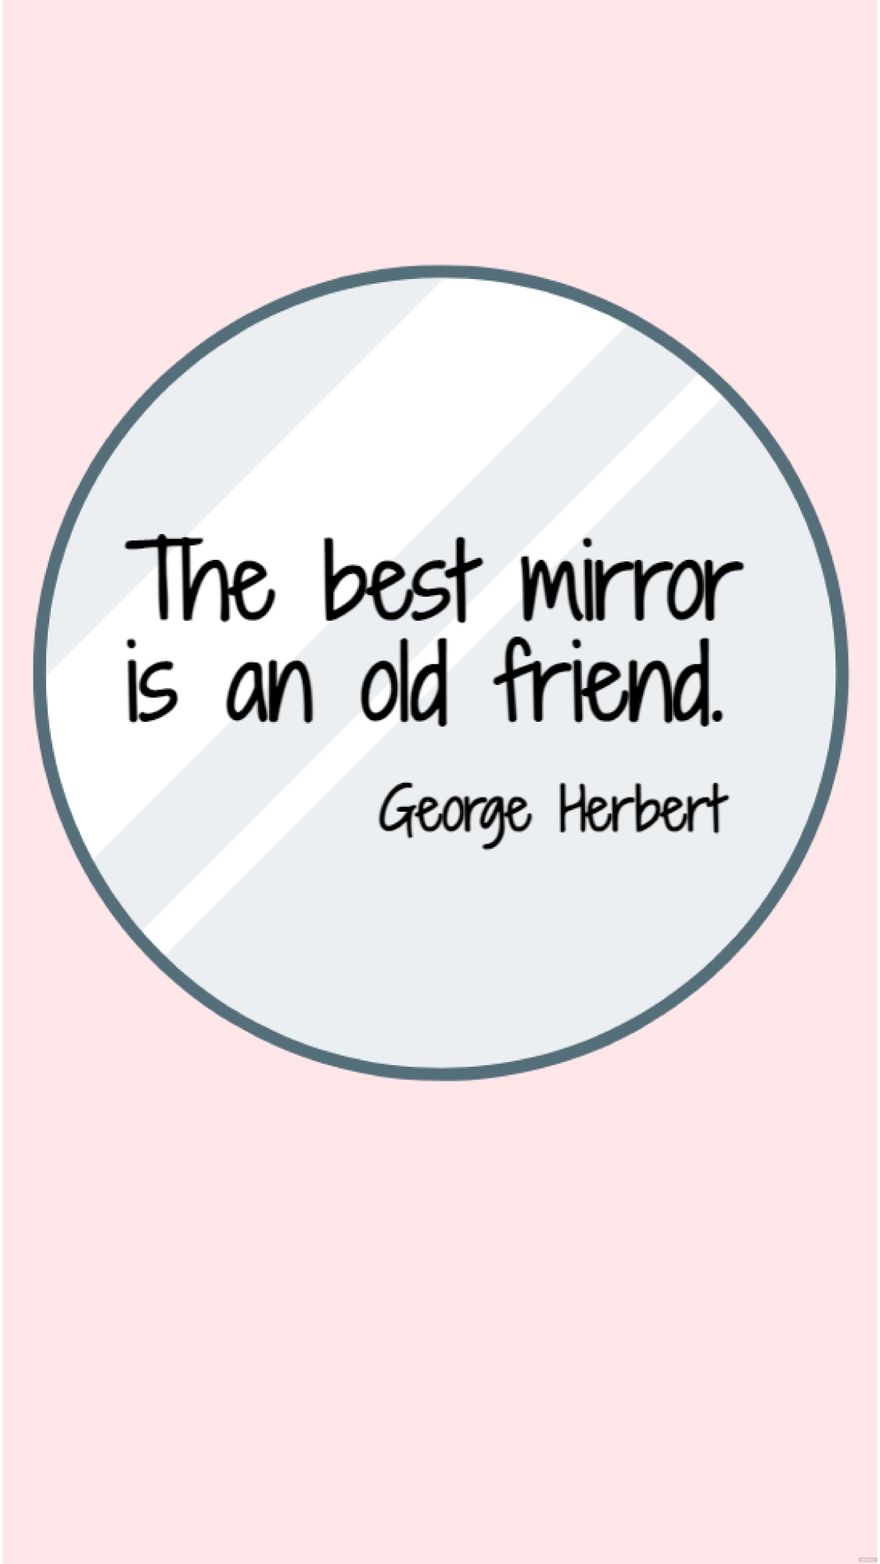 George Herbert - The best mirror is an old friend.